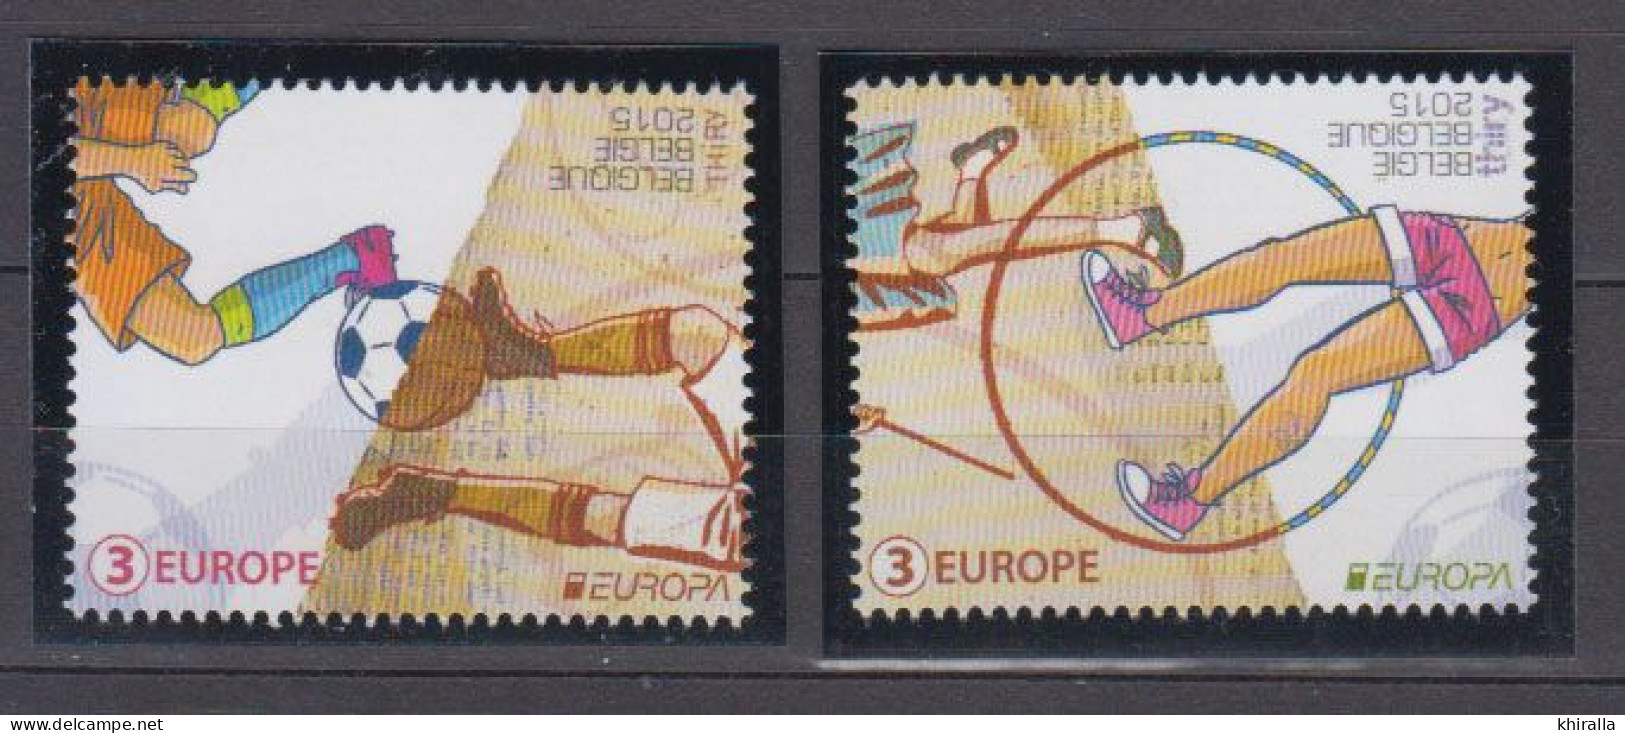 BELGIQUE   2015  EUROPA   N° 4496 / 4497         ( Neuf Sans Charnieres )   COTE 36 € 00 - Unused Stamps